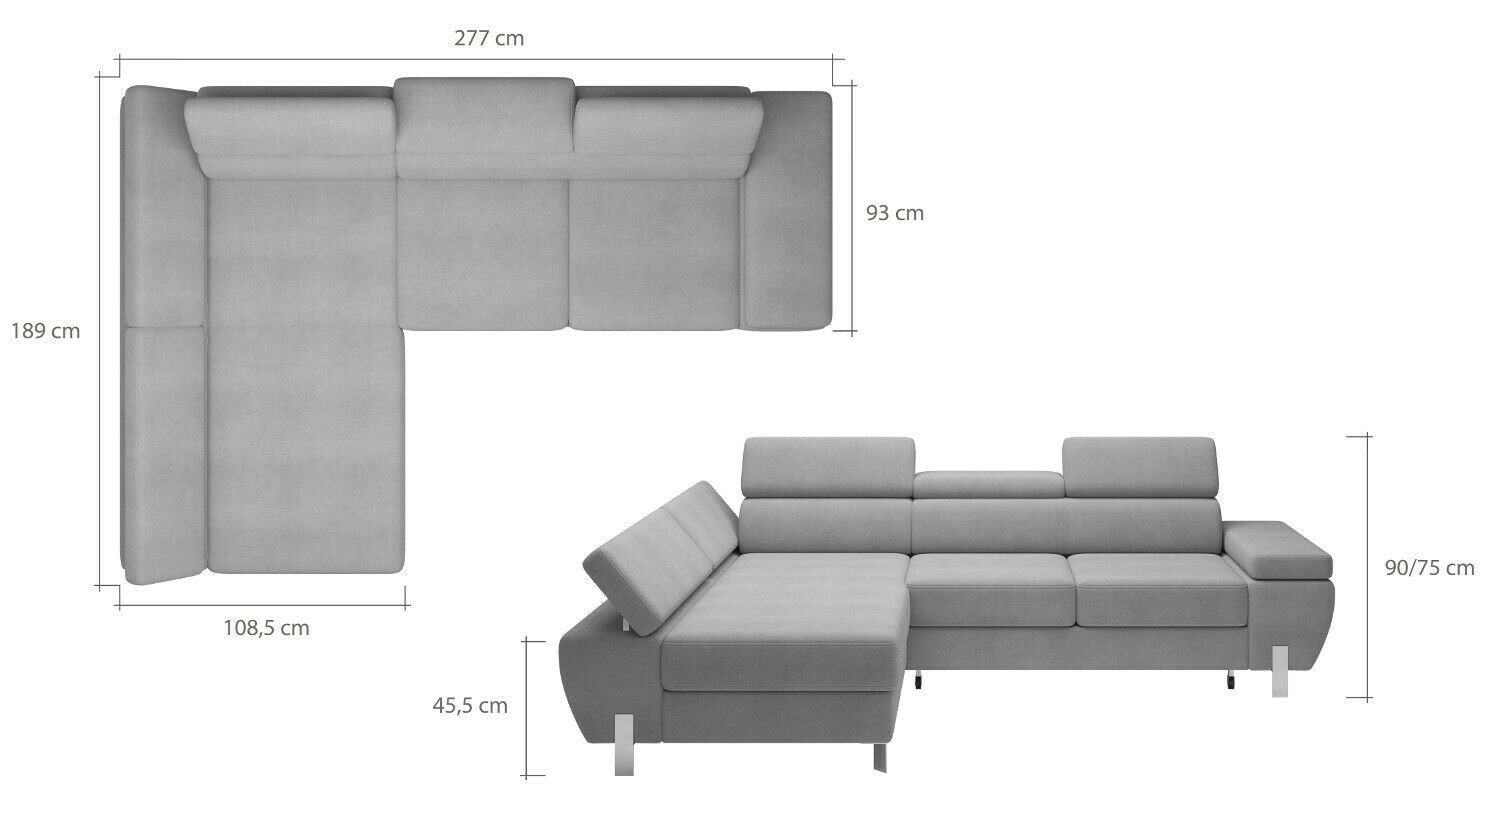 JVmoebel Ecksofa Couch Mit Sofas, Design Ecksofa Schlafsofa Bettfunktion Grau L-form Textil Bettfunktion